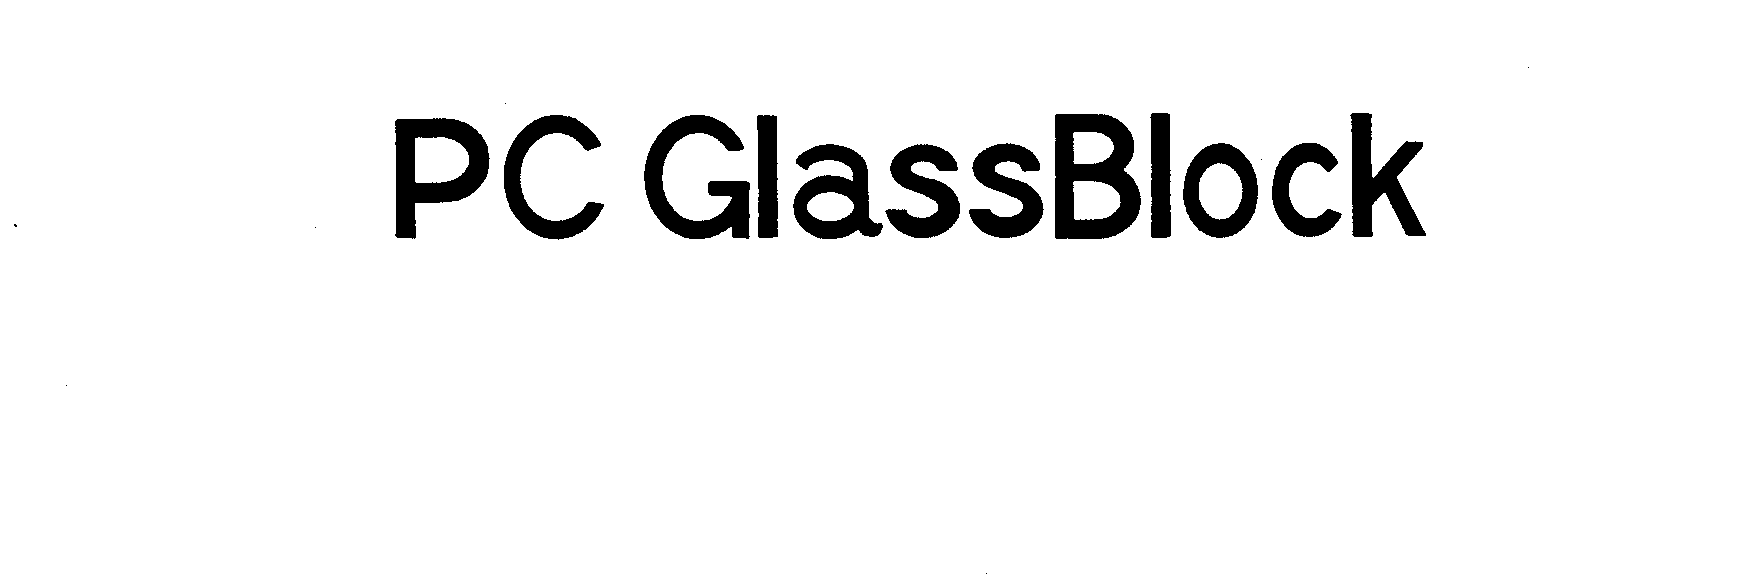  PC GLASSBLOCK